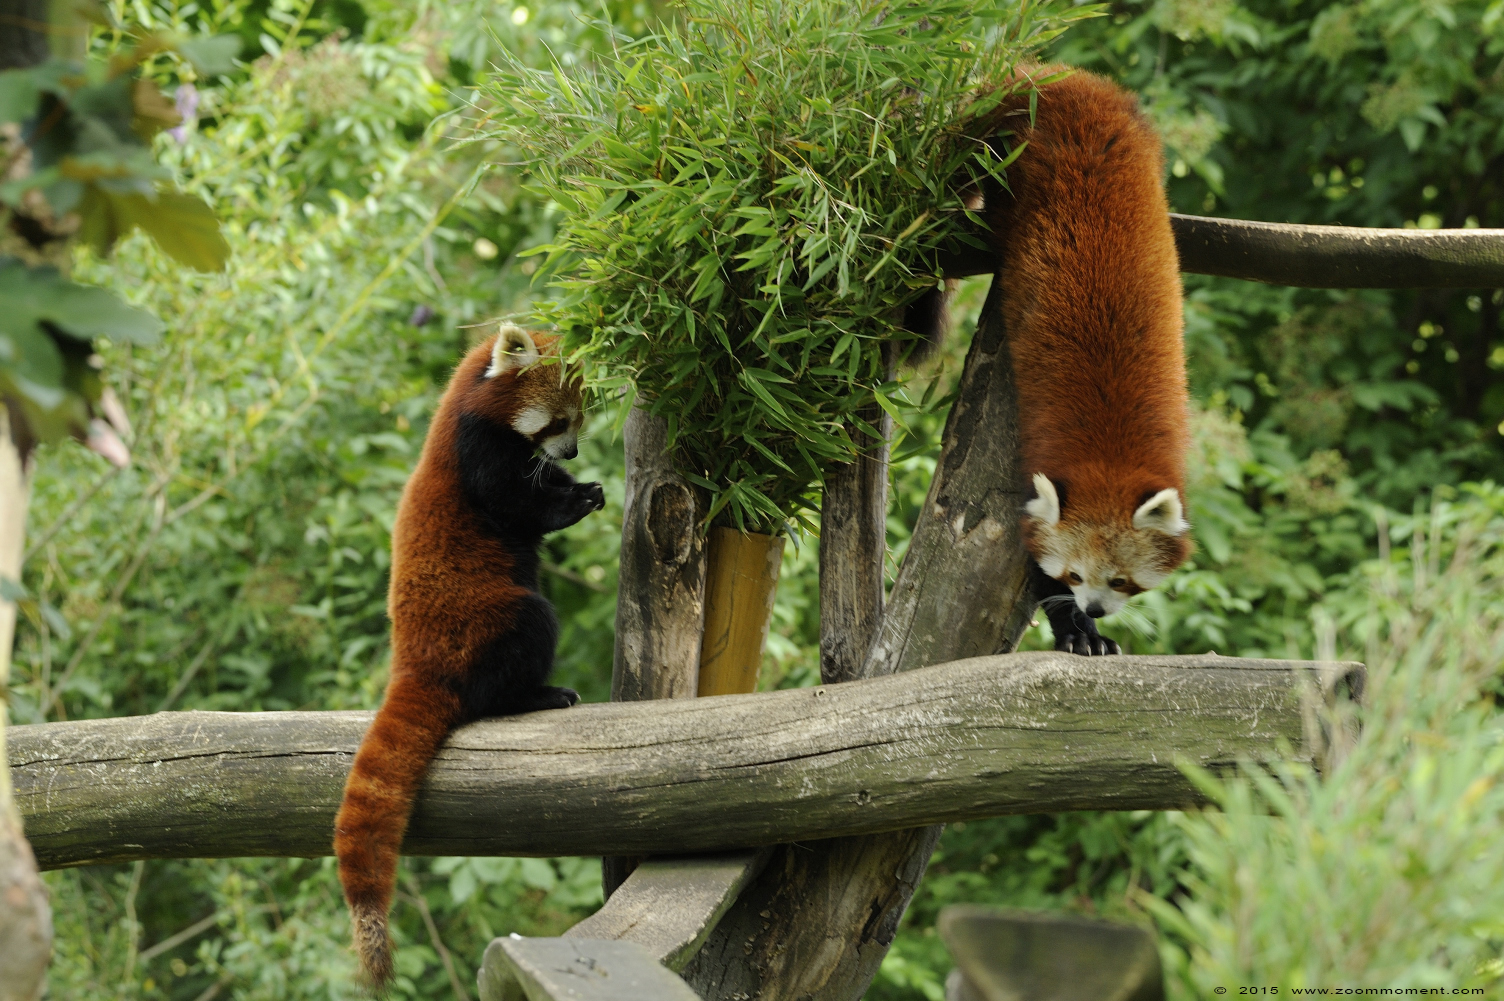 kleine of rode panda ( Ailurus fulgens ) lesser or red panda
Trefwoorden: Gelsenkirchen Zoom Erlebniswelt Germany Duitsland zoo rode panda Ailurus fulgens lesser red panda